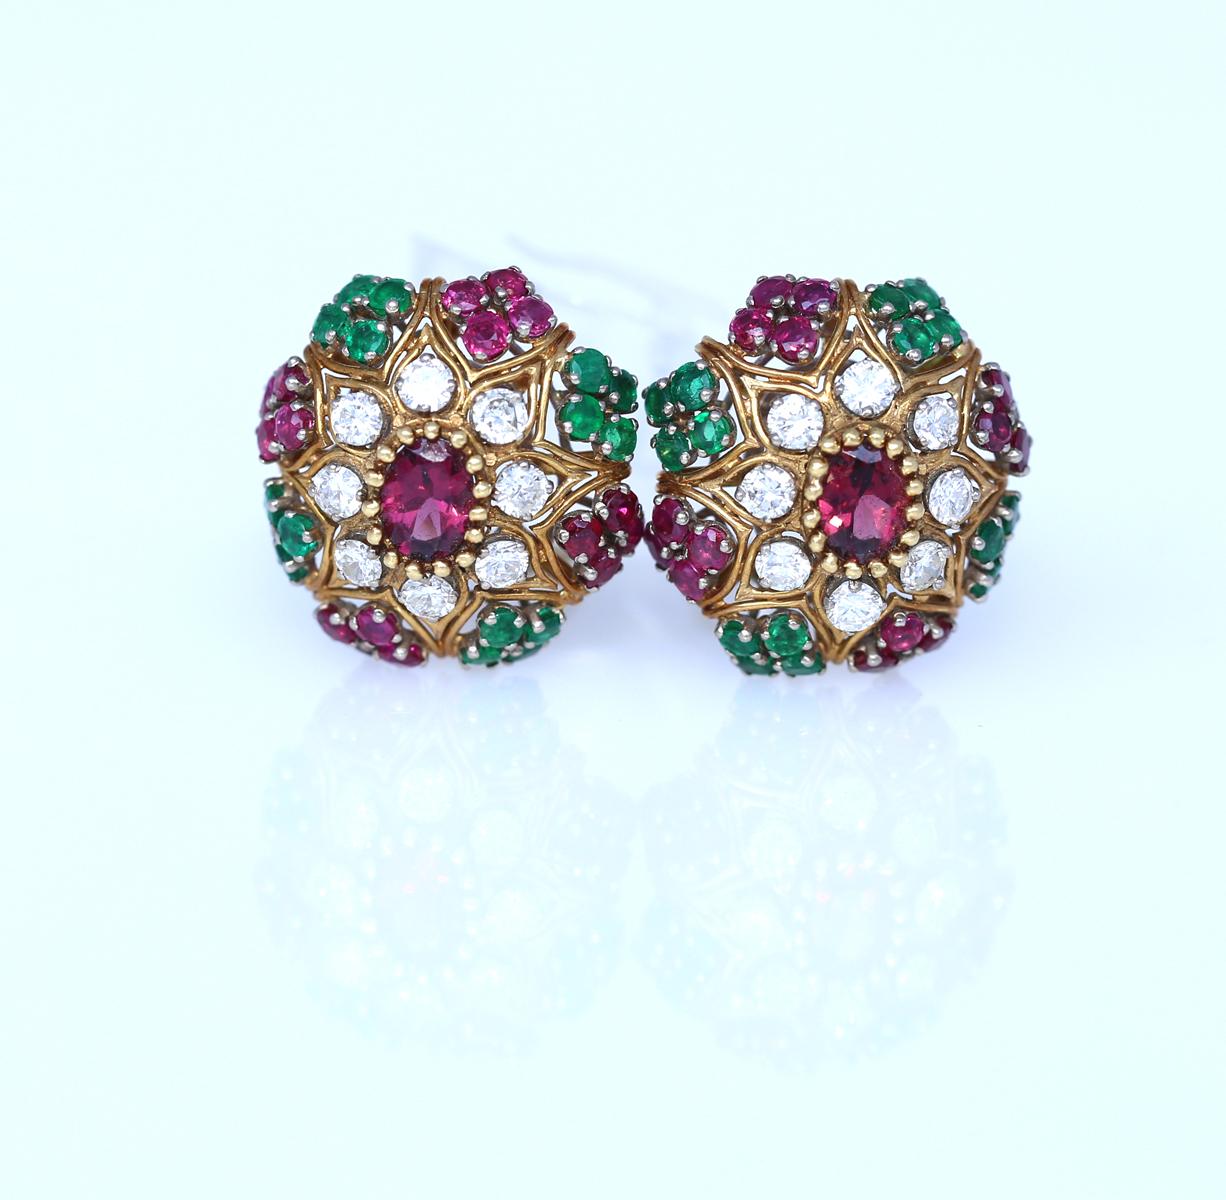 Oval Cut Emeralds Diamonds Tourmaline Clips Earrings 18K Yellow Gold, 1970